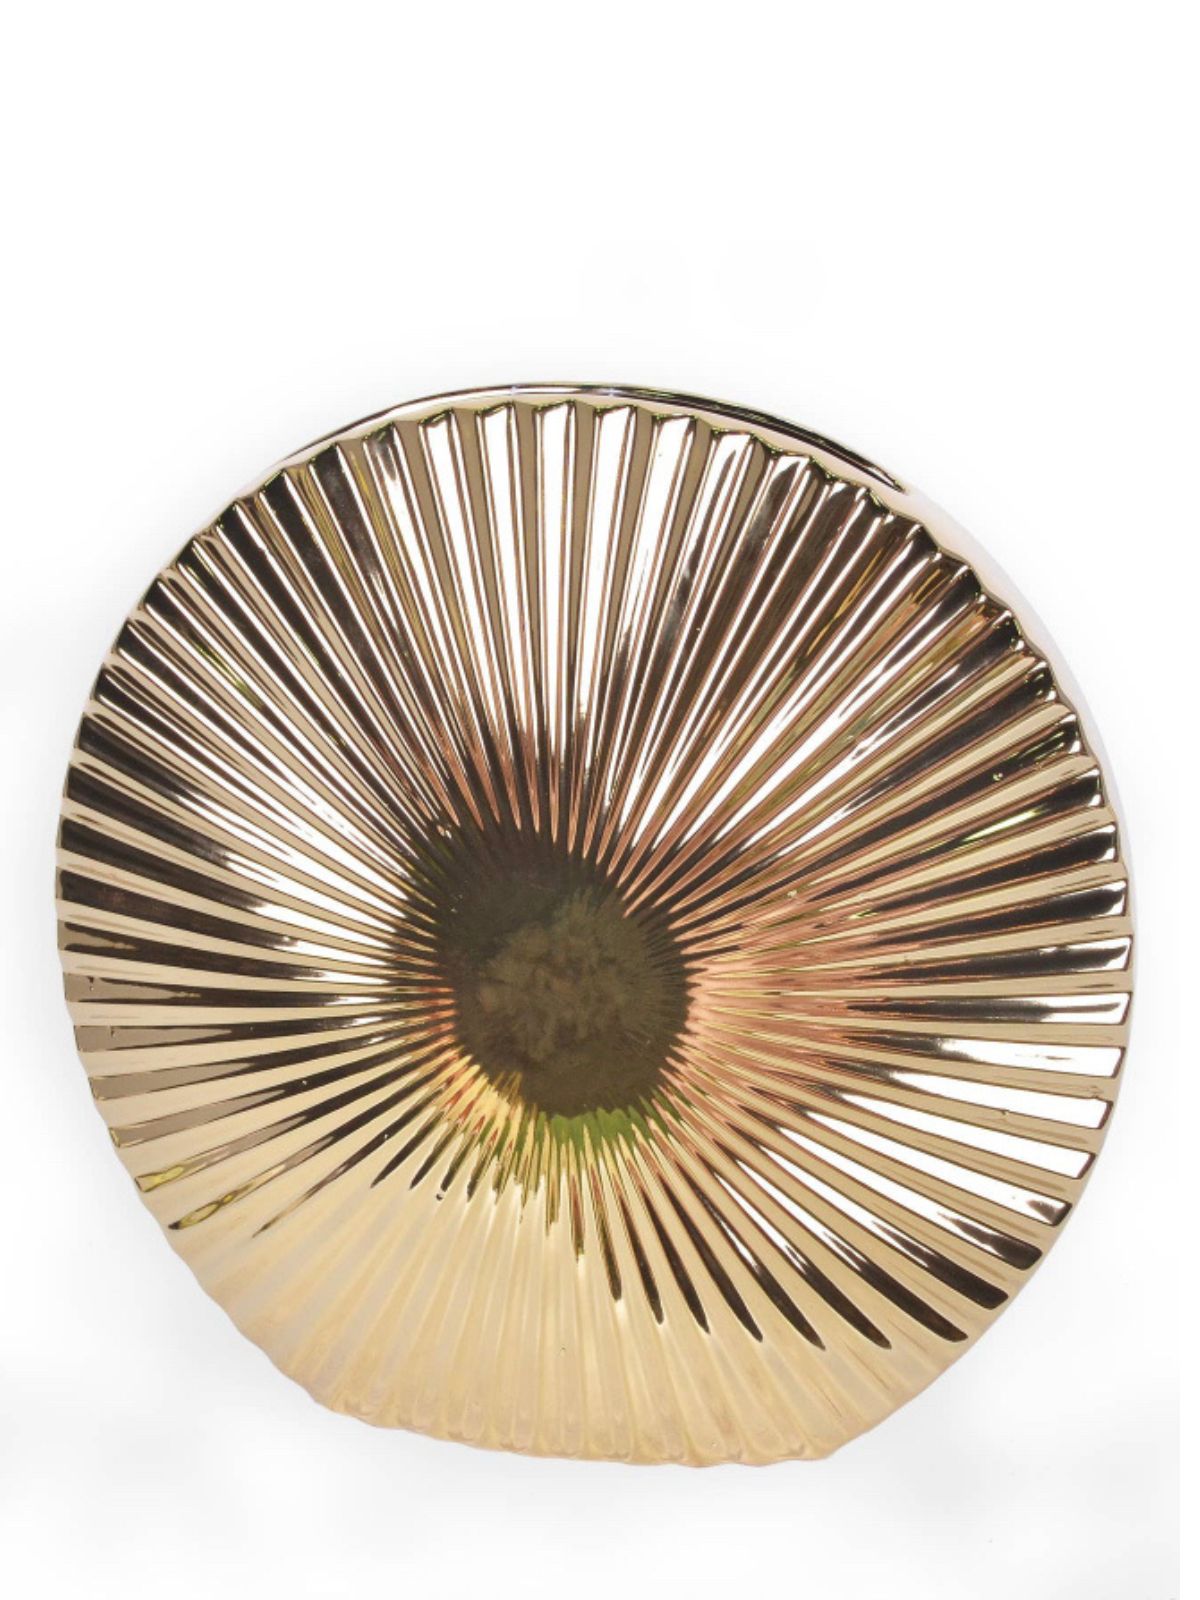 12H Gold Porcelain Round Decorative Vase with Luxury Ridge Design - Front View.